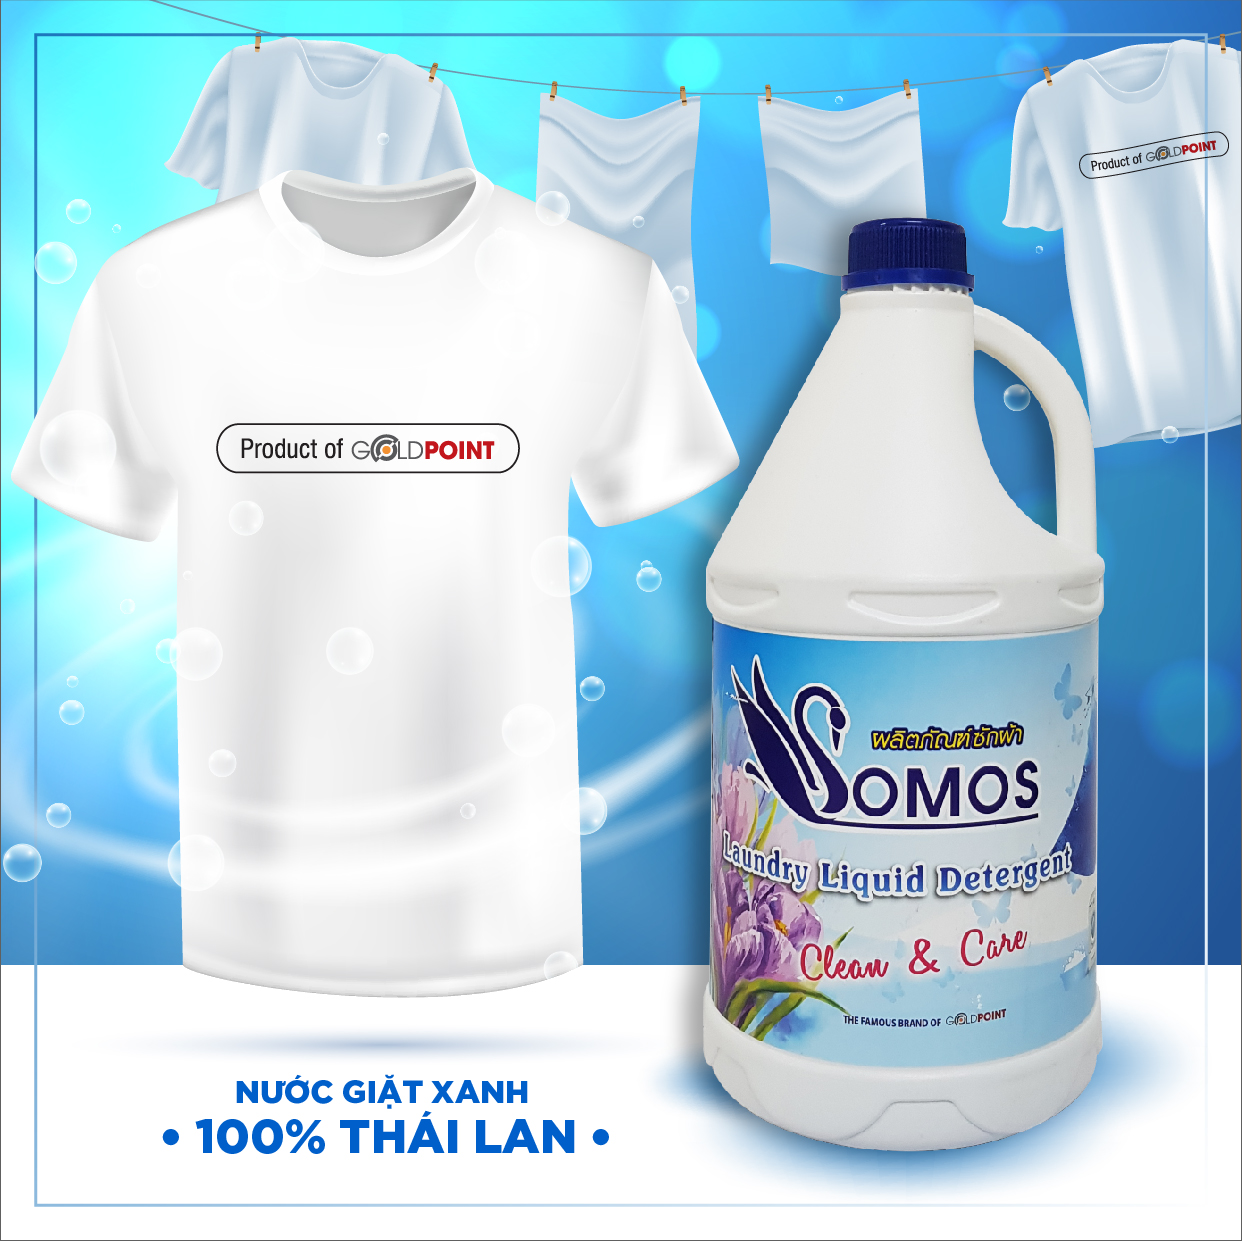 Nước giặt SOMOS-02